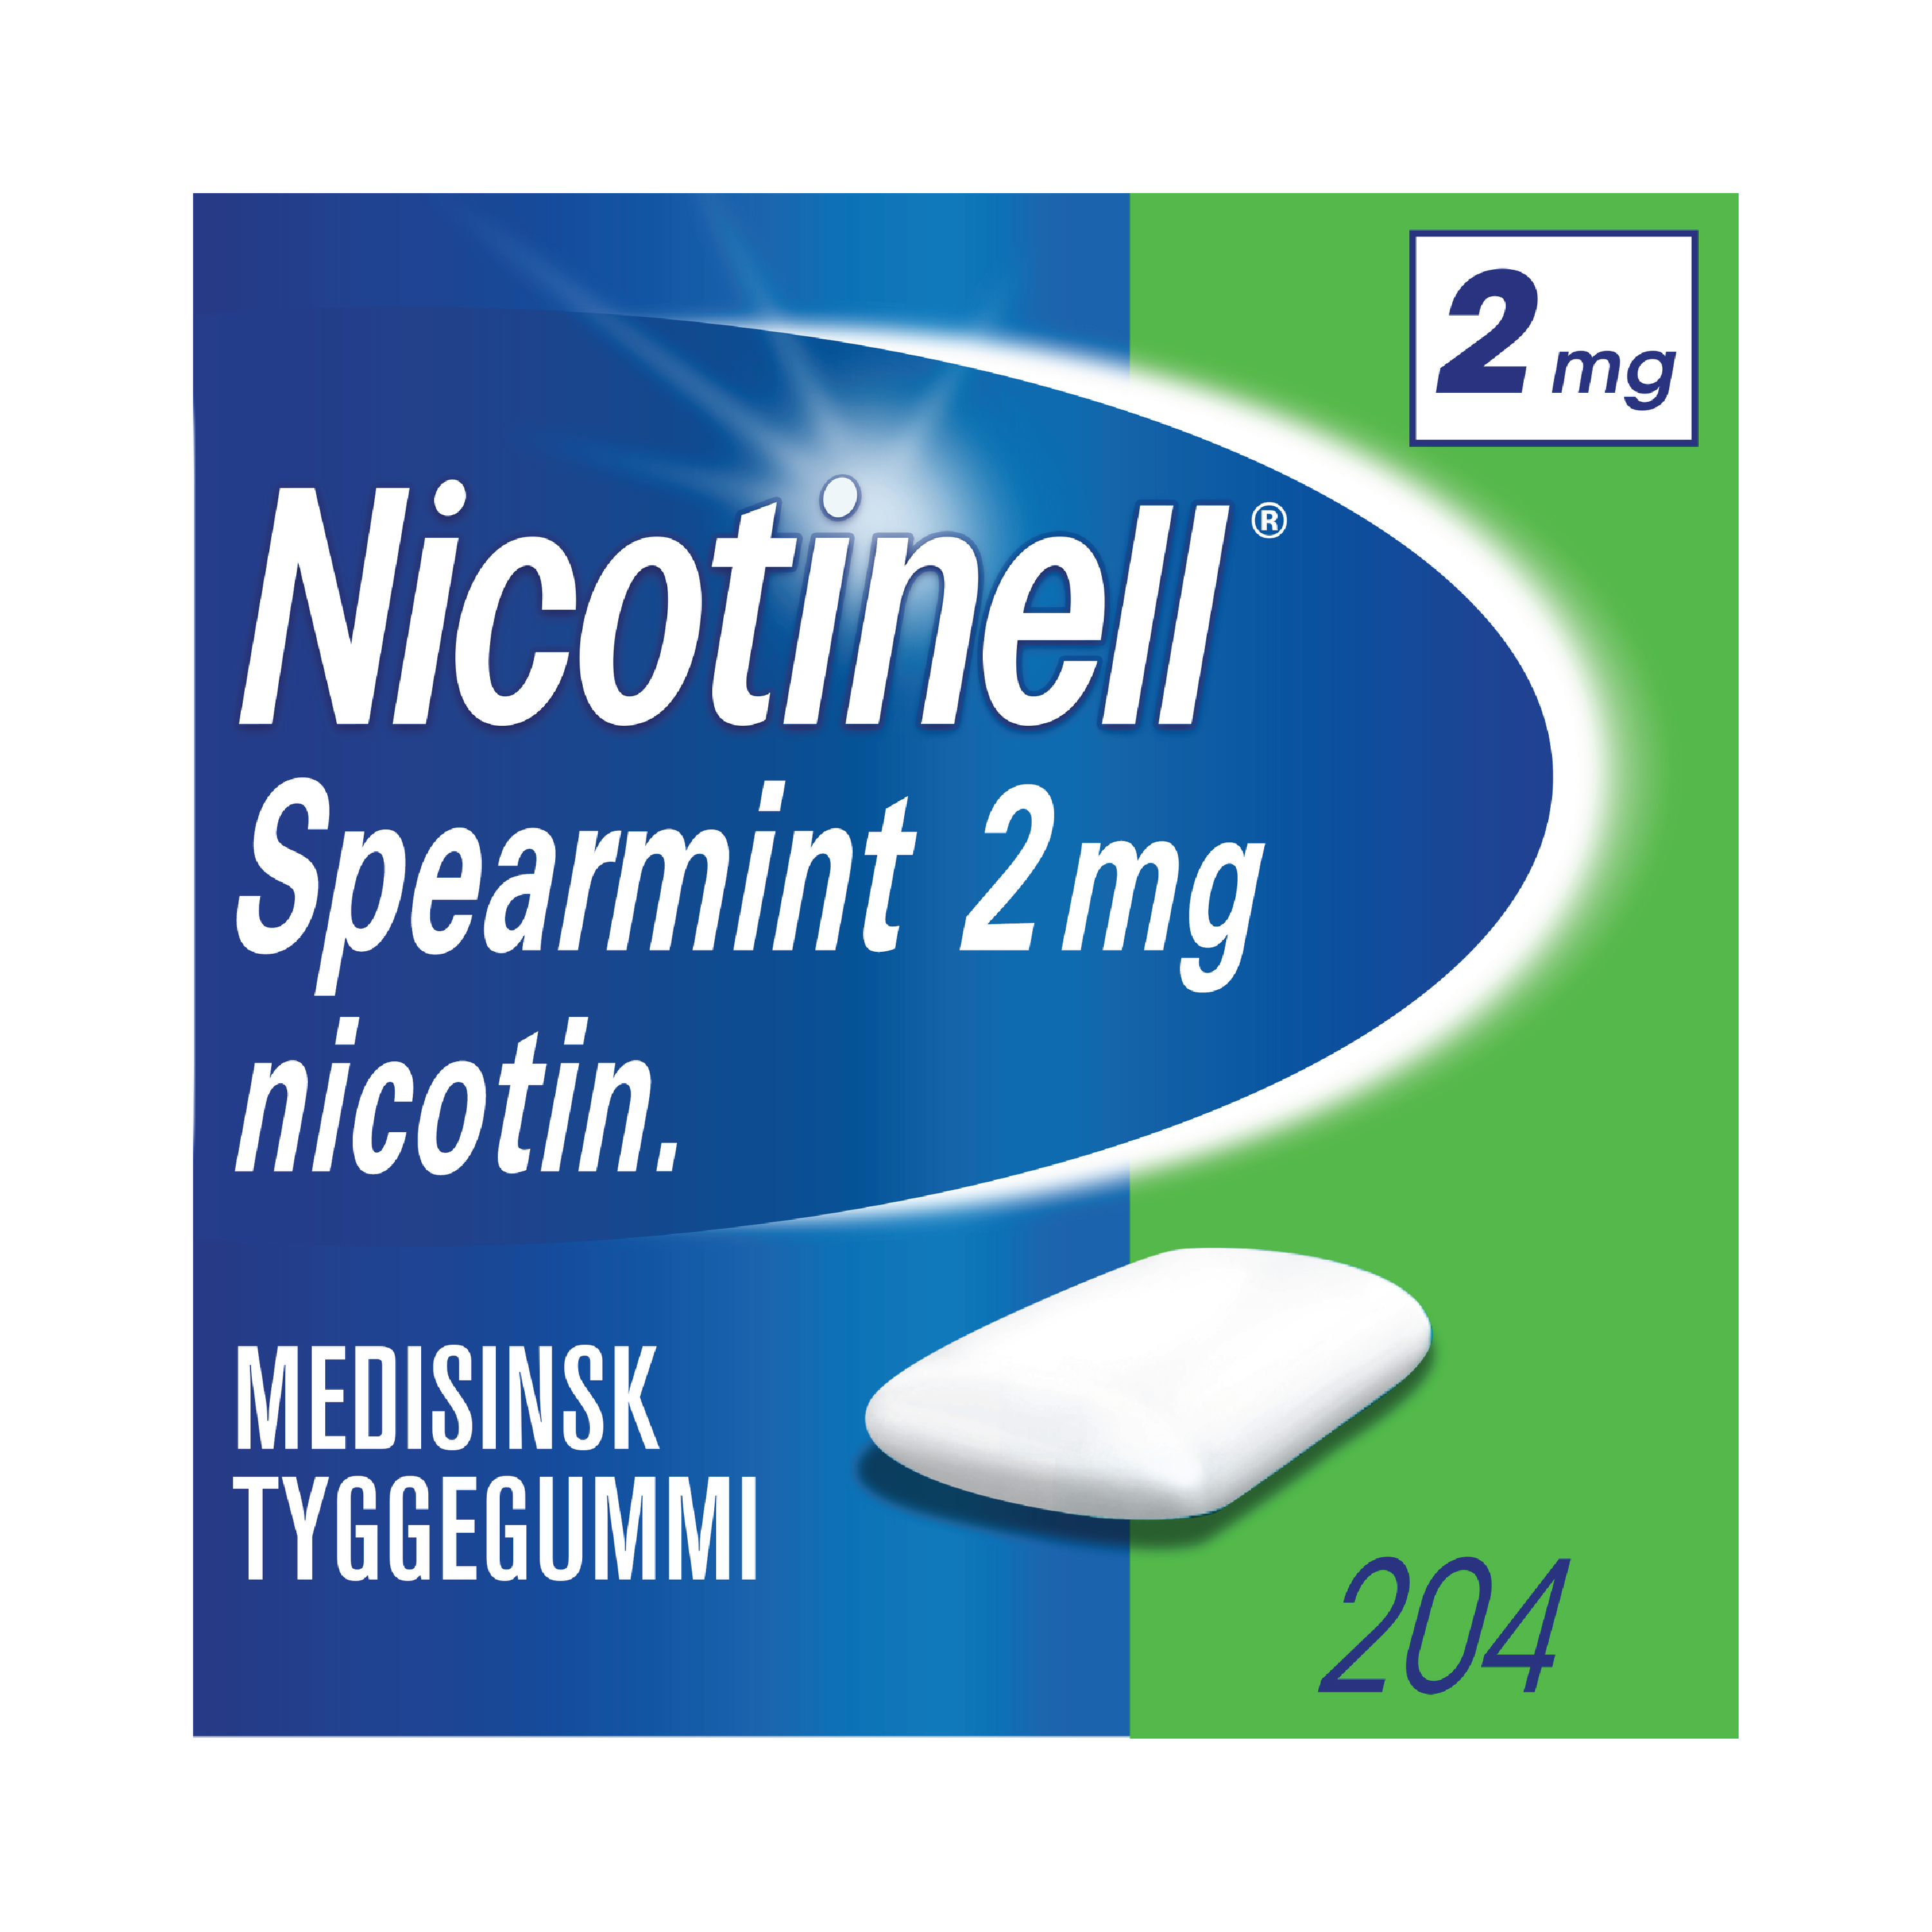 Nicotinell Tyggegummi 2mg spearmint, 204 stk.